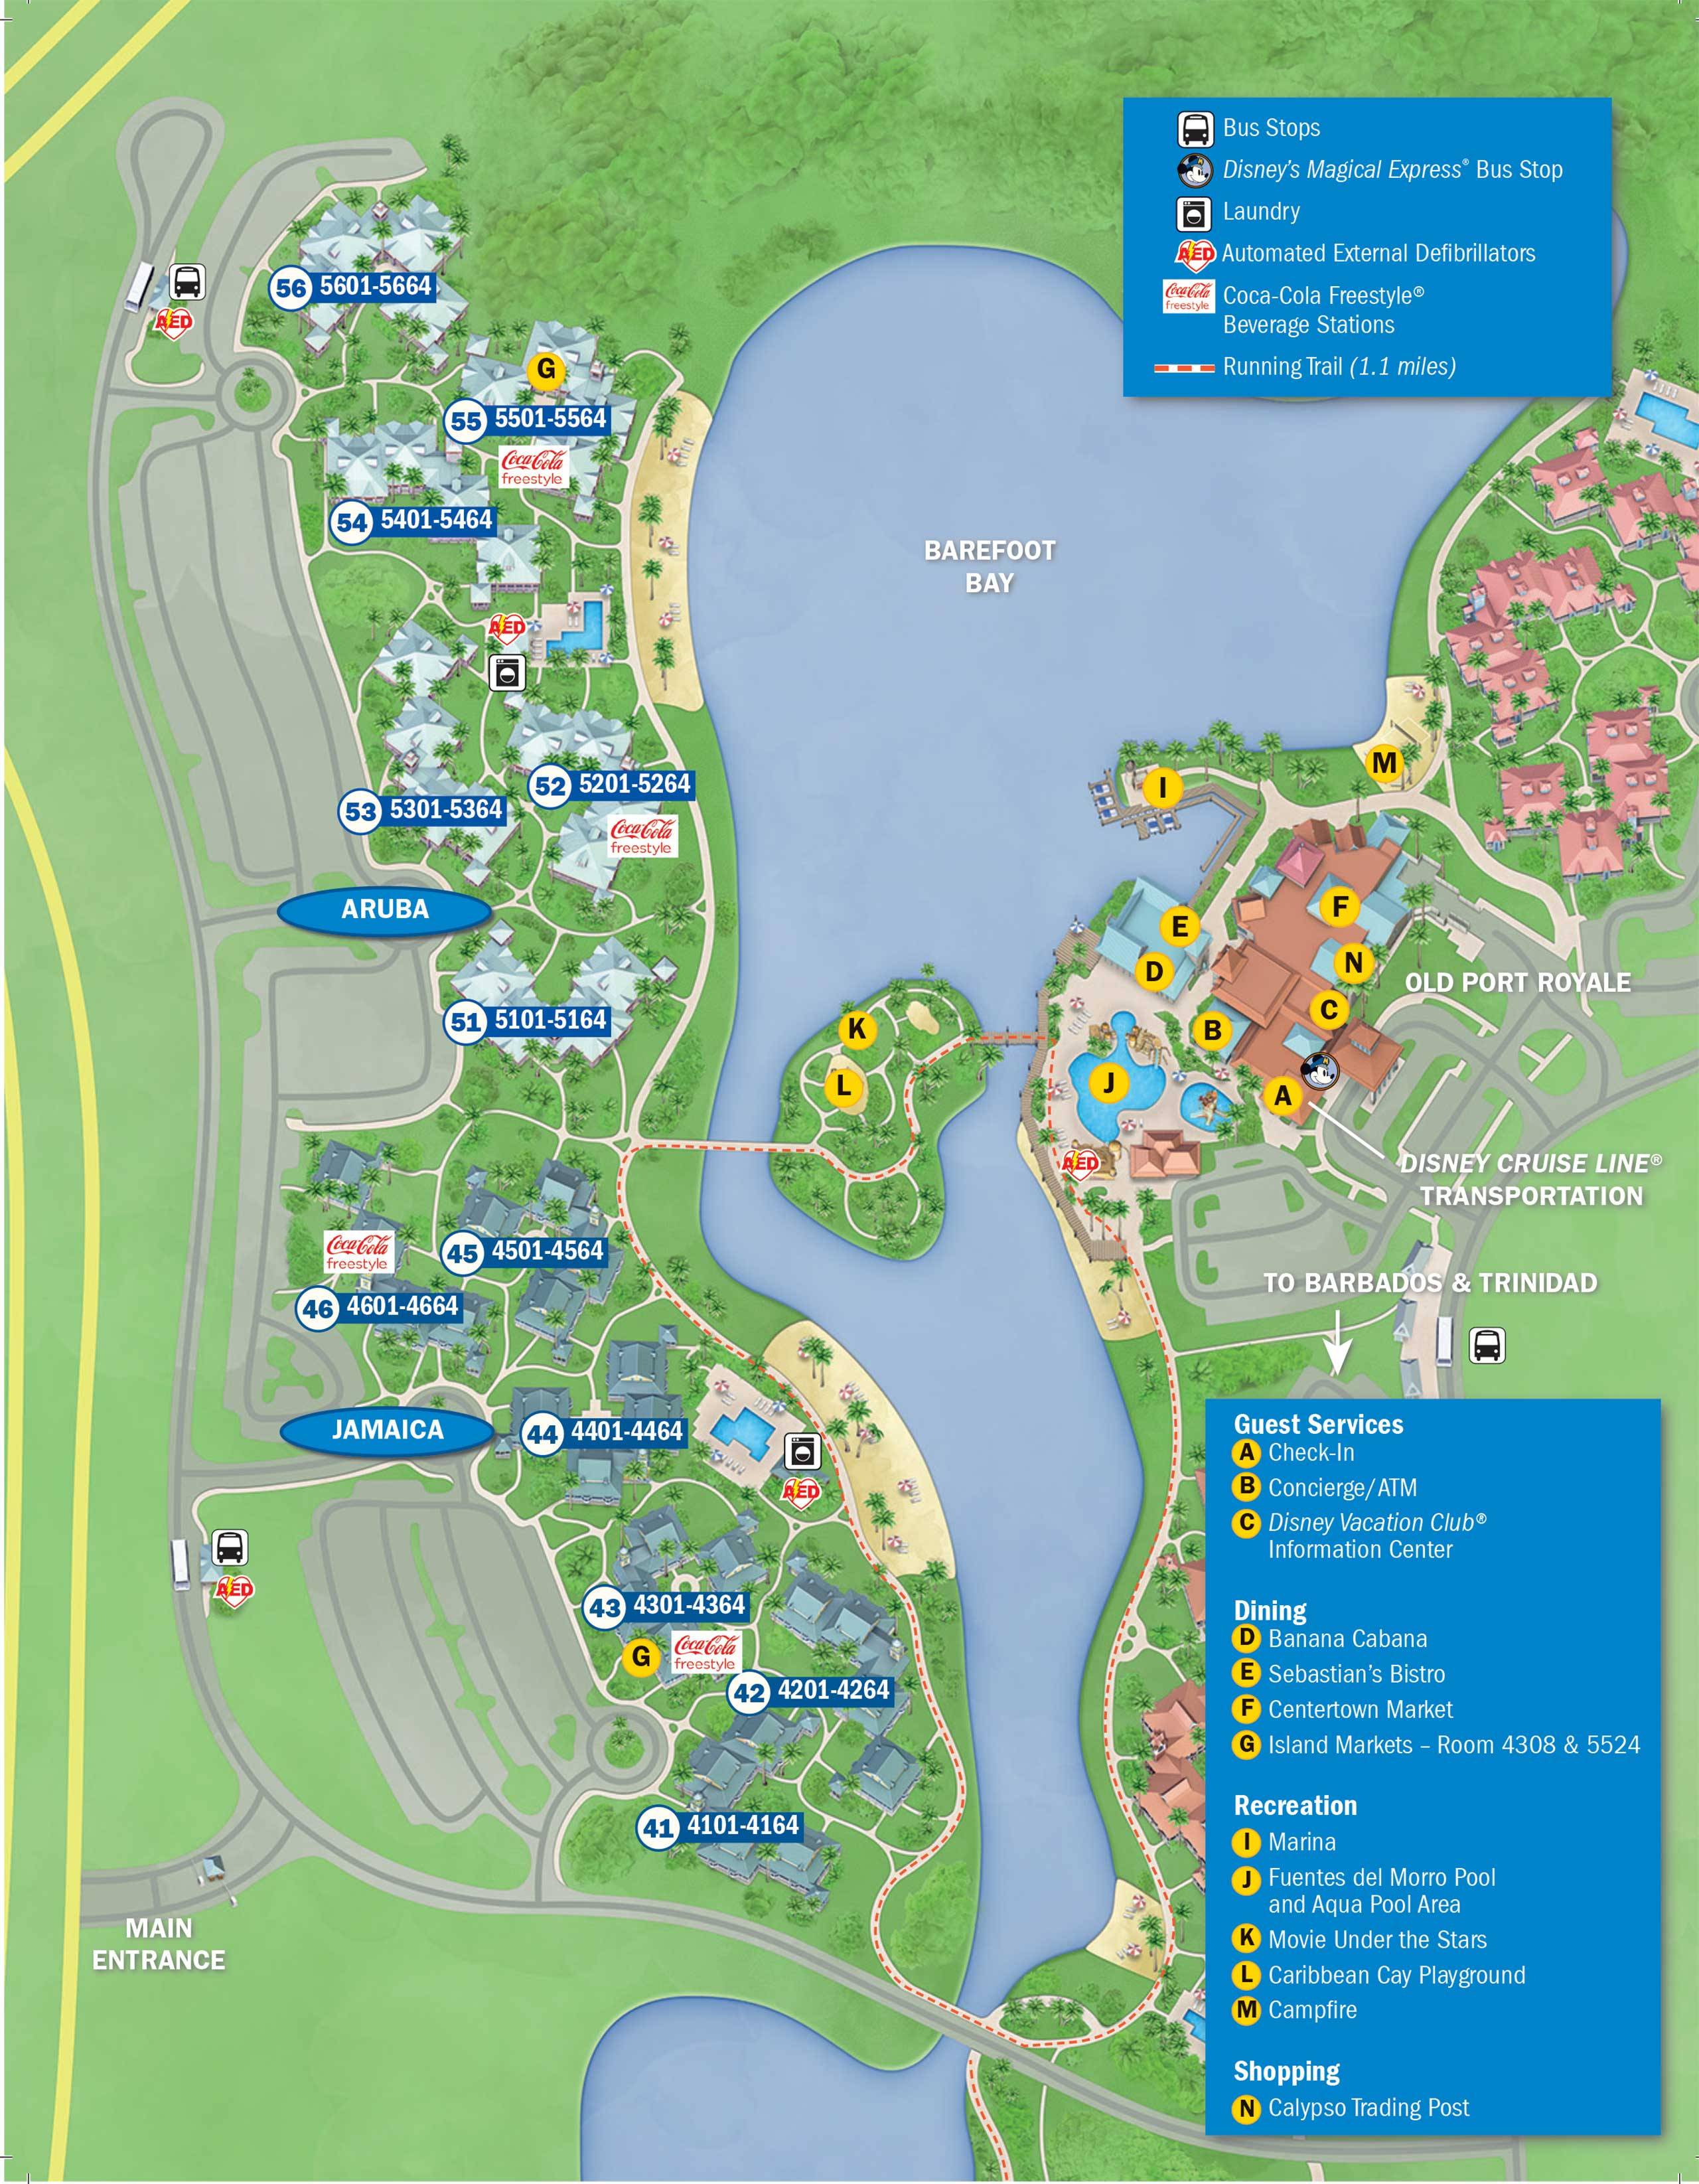 Updated Disney's Caribbean Beach Resort map